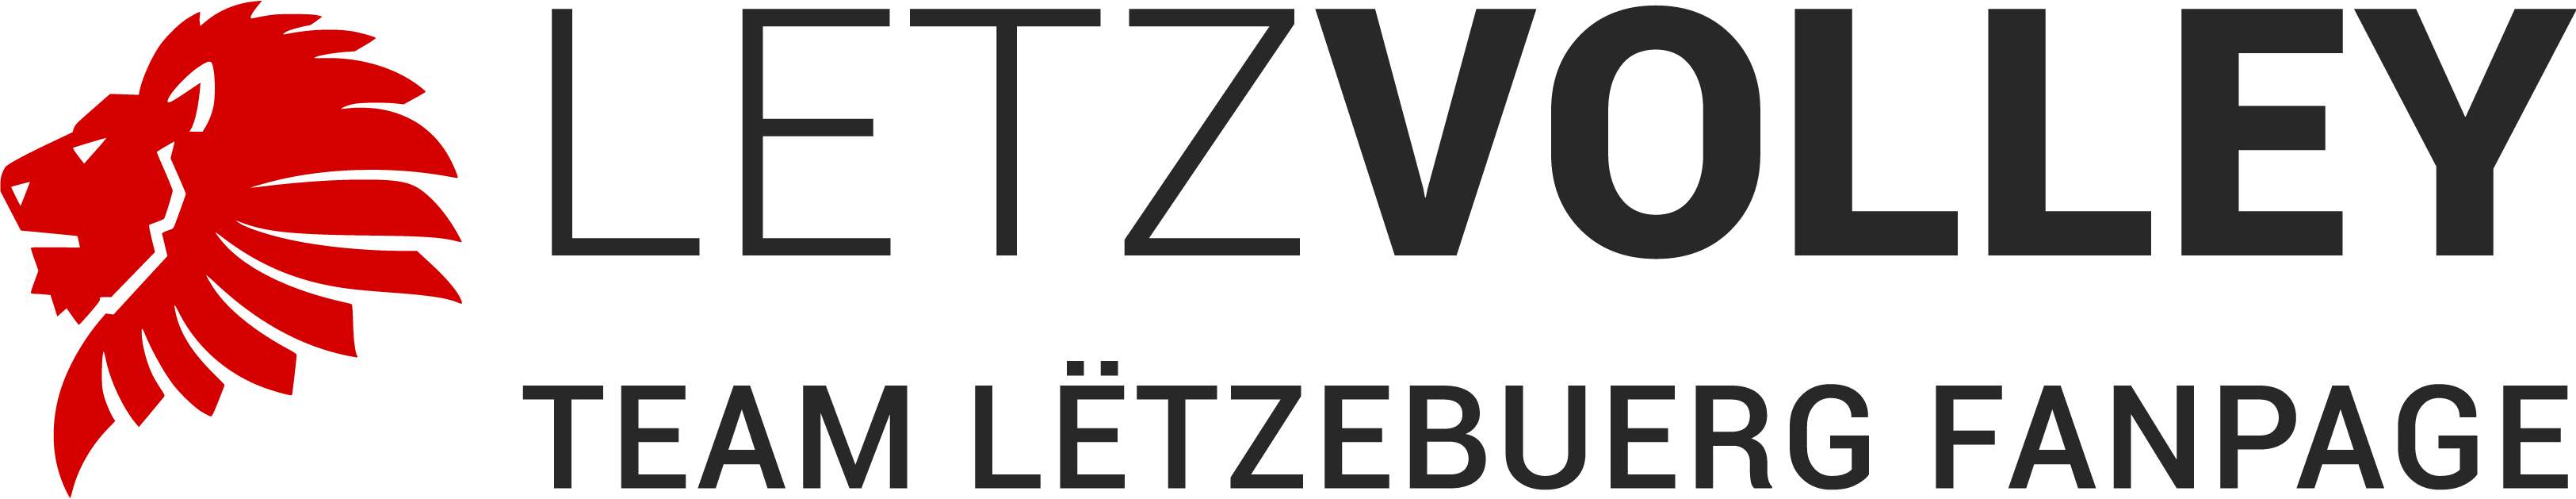 letzvolley logo black